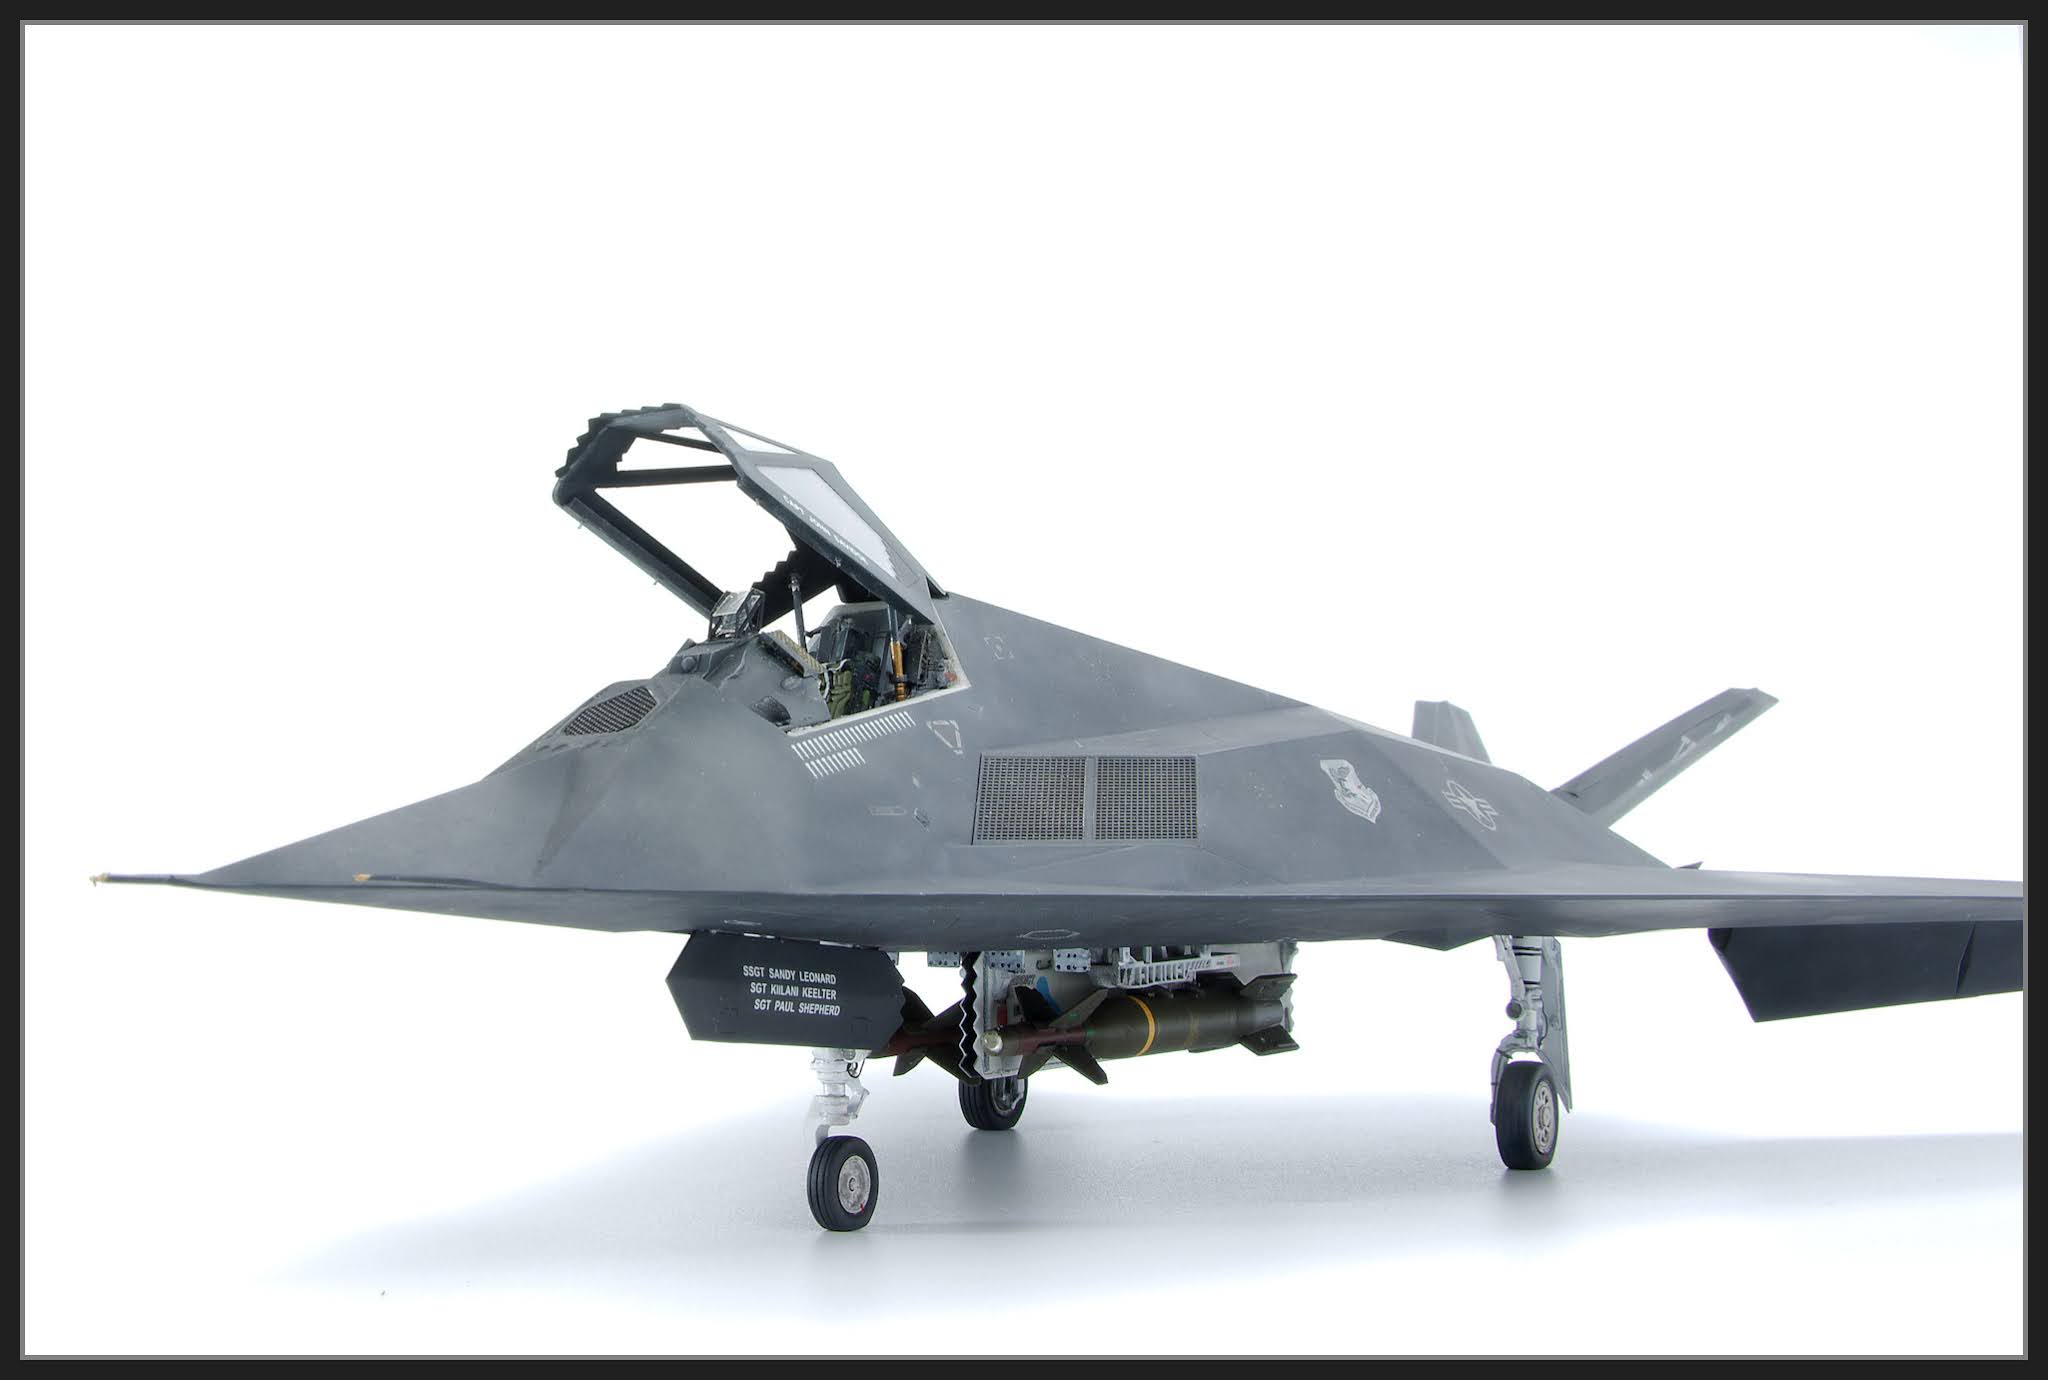 The Hamfisted Modeller: 1/48 Tamiya F-117A Nighthawk - Final Verdict